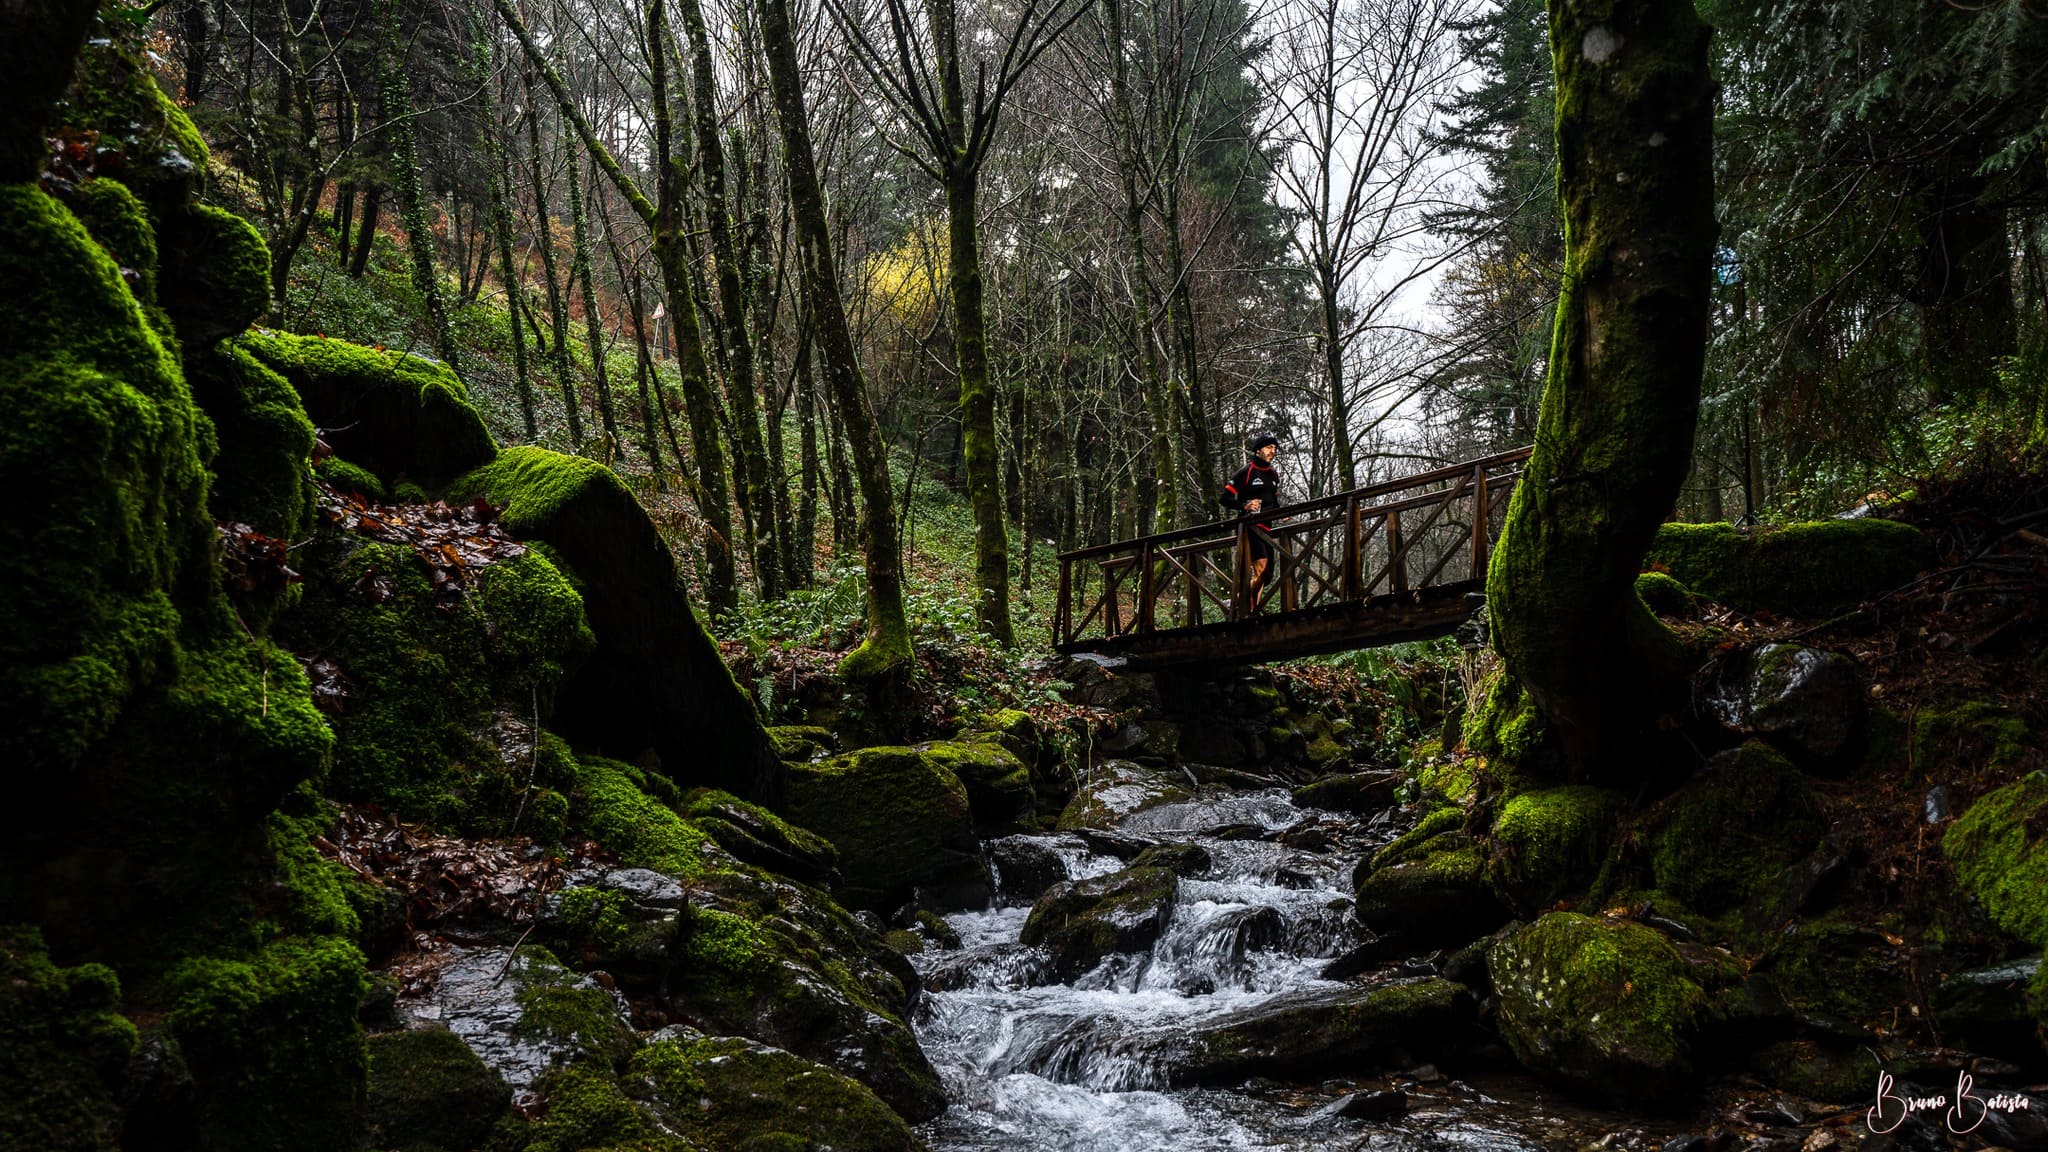 Trail runner crosses a small bridge in a Marao woodland